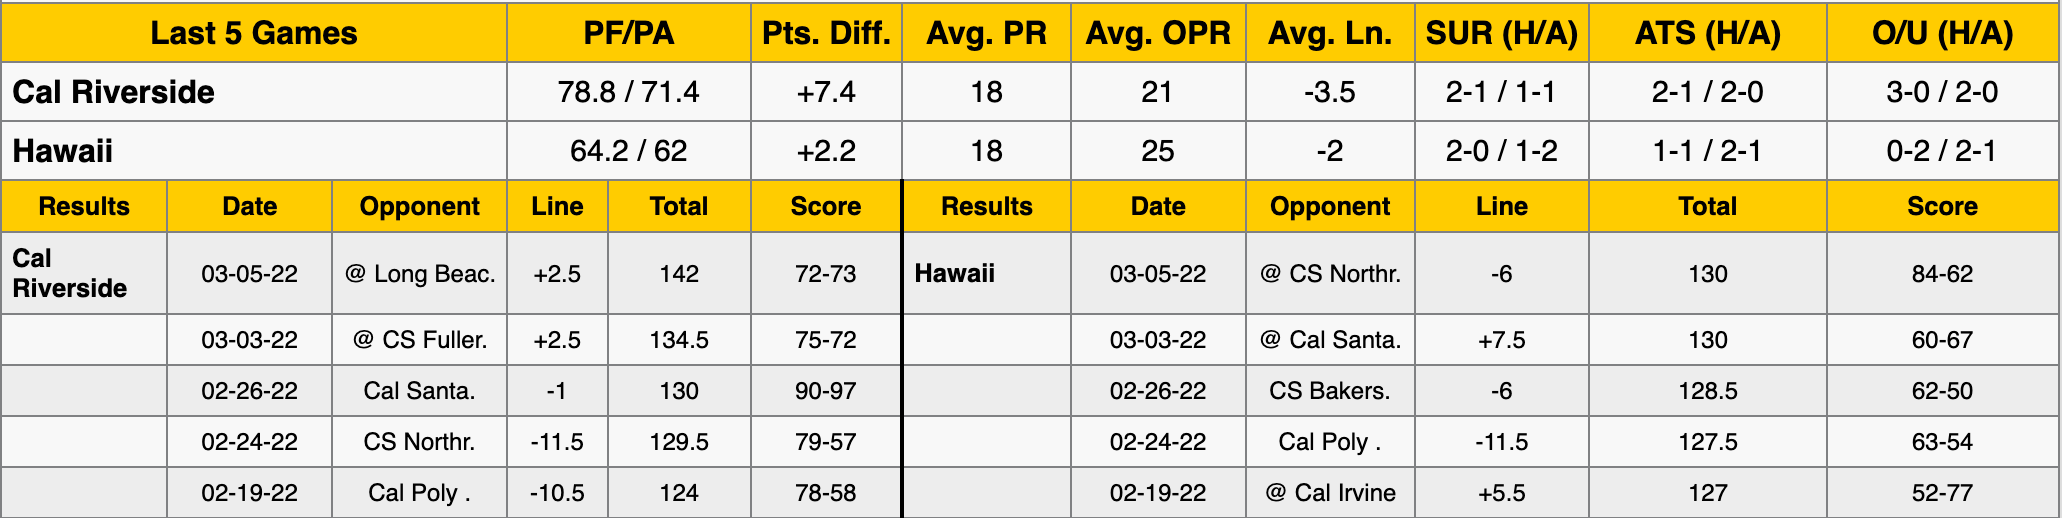 Hawaii vs UC Riverside Data